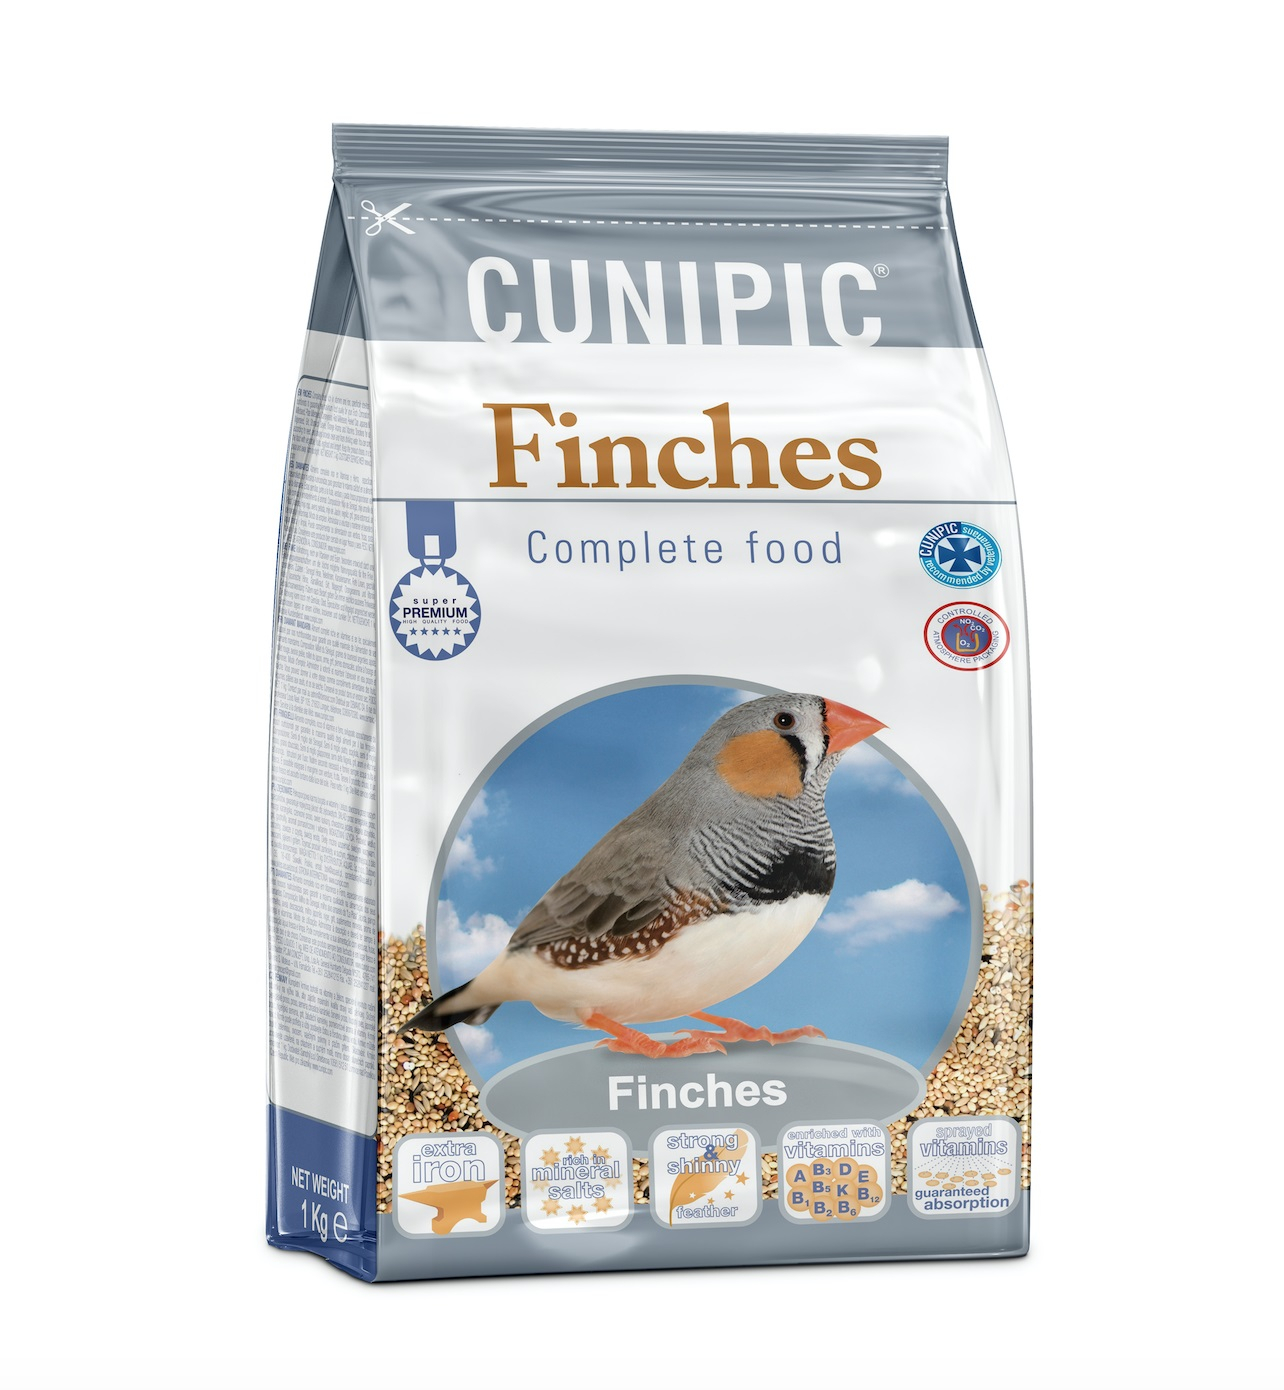 Cunipic Finches Alimento Premium para diamantes mandarines y pájaros tropicales